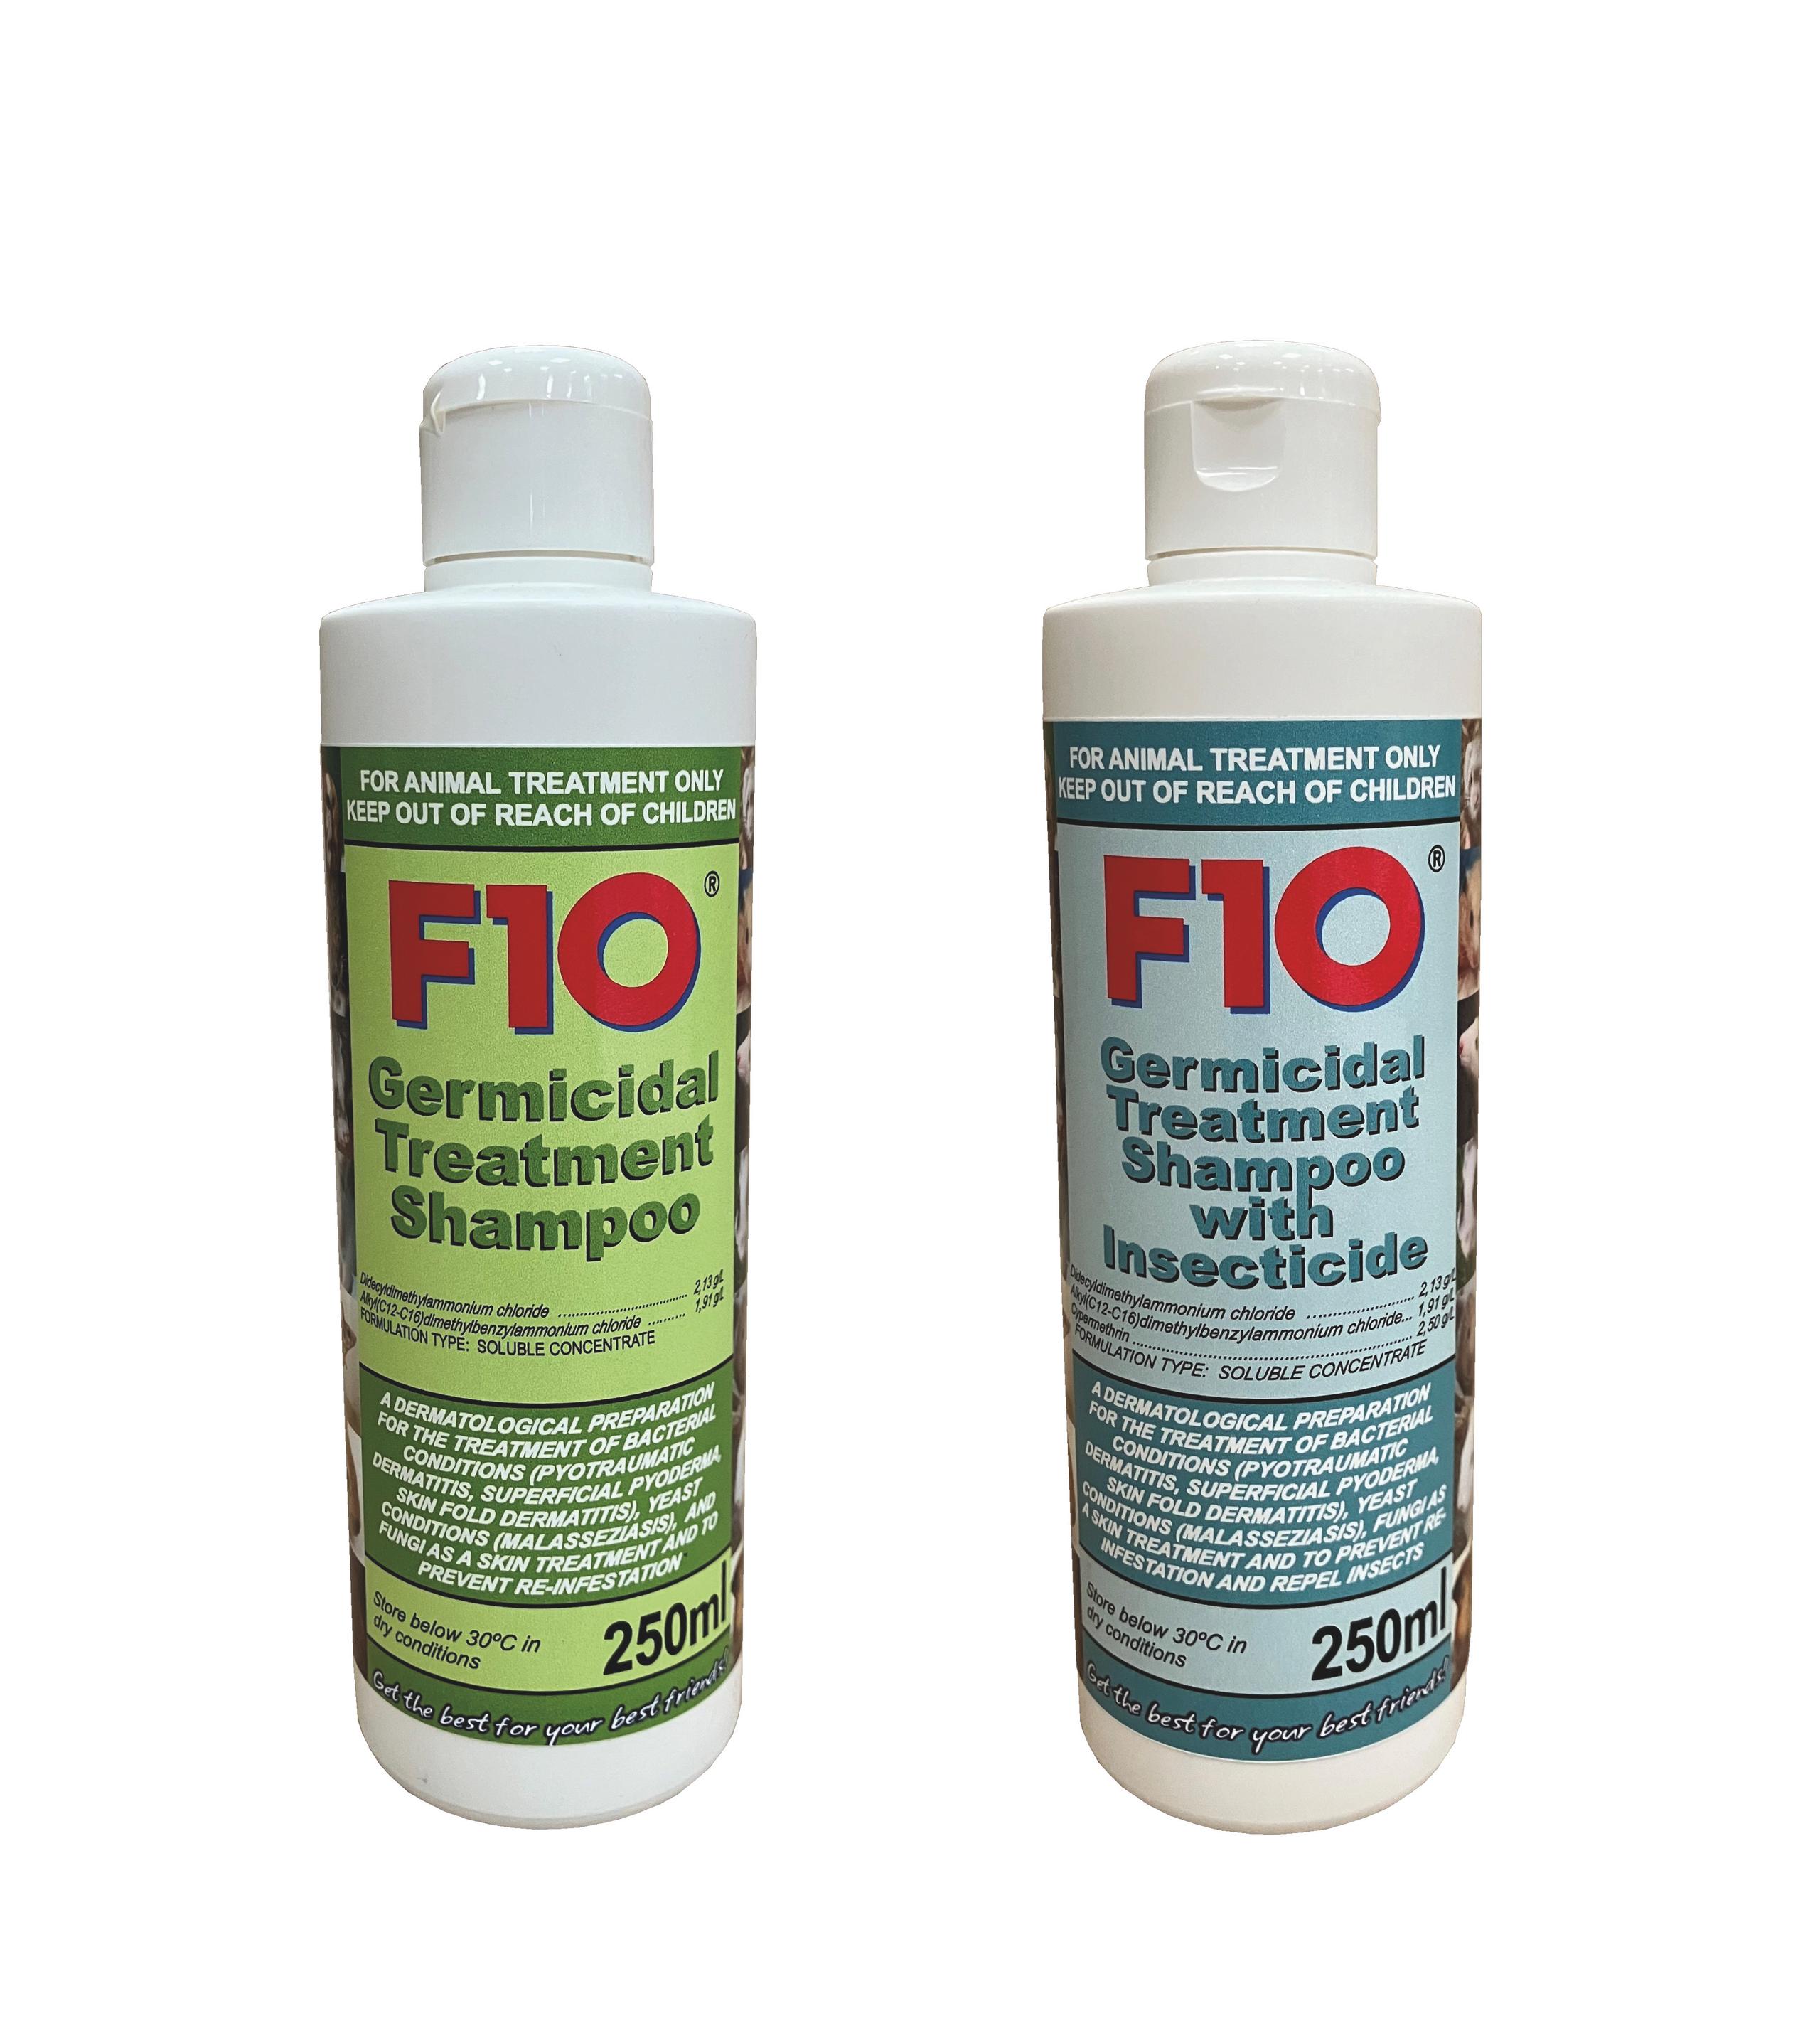 Bottles of F10 Germicidal Treatment Shampoo